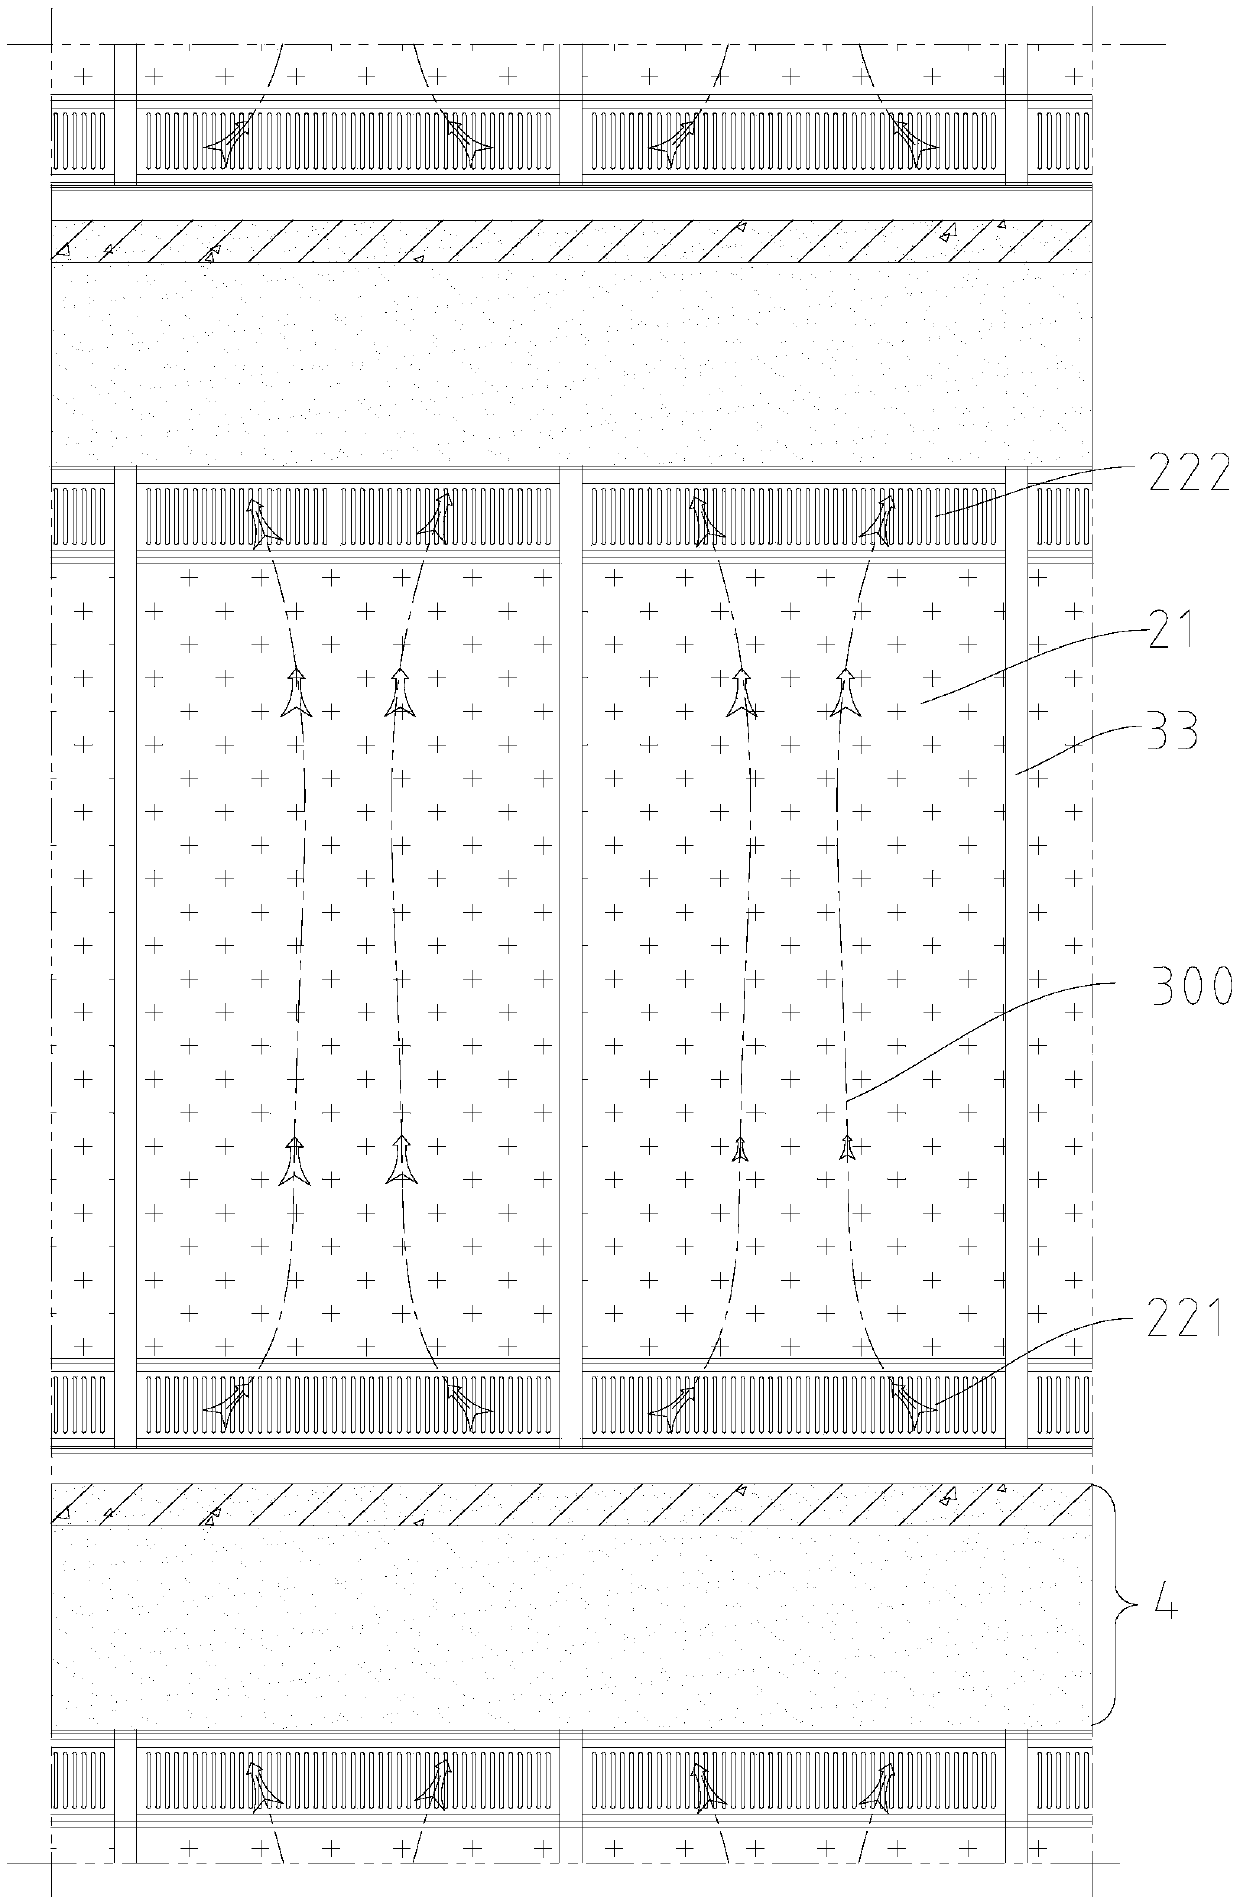 Photovoltaic curtain wall